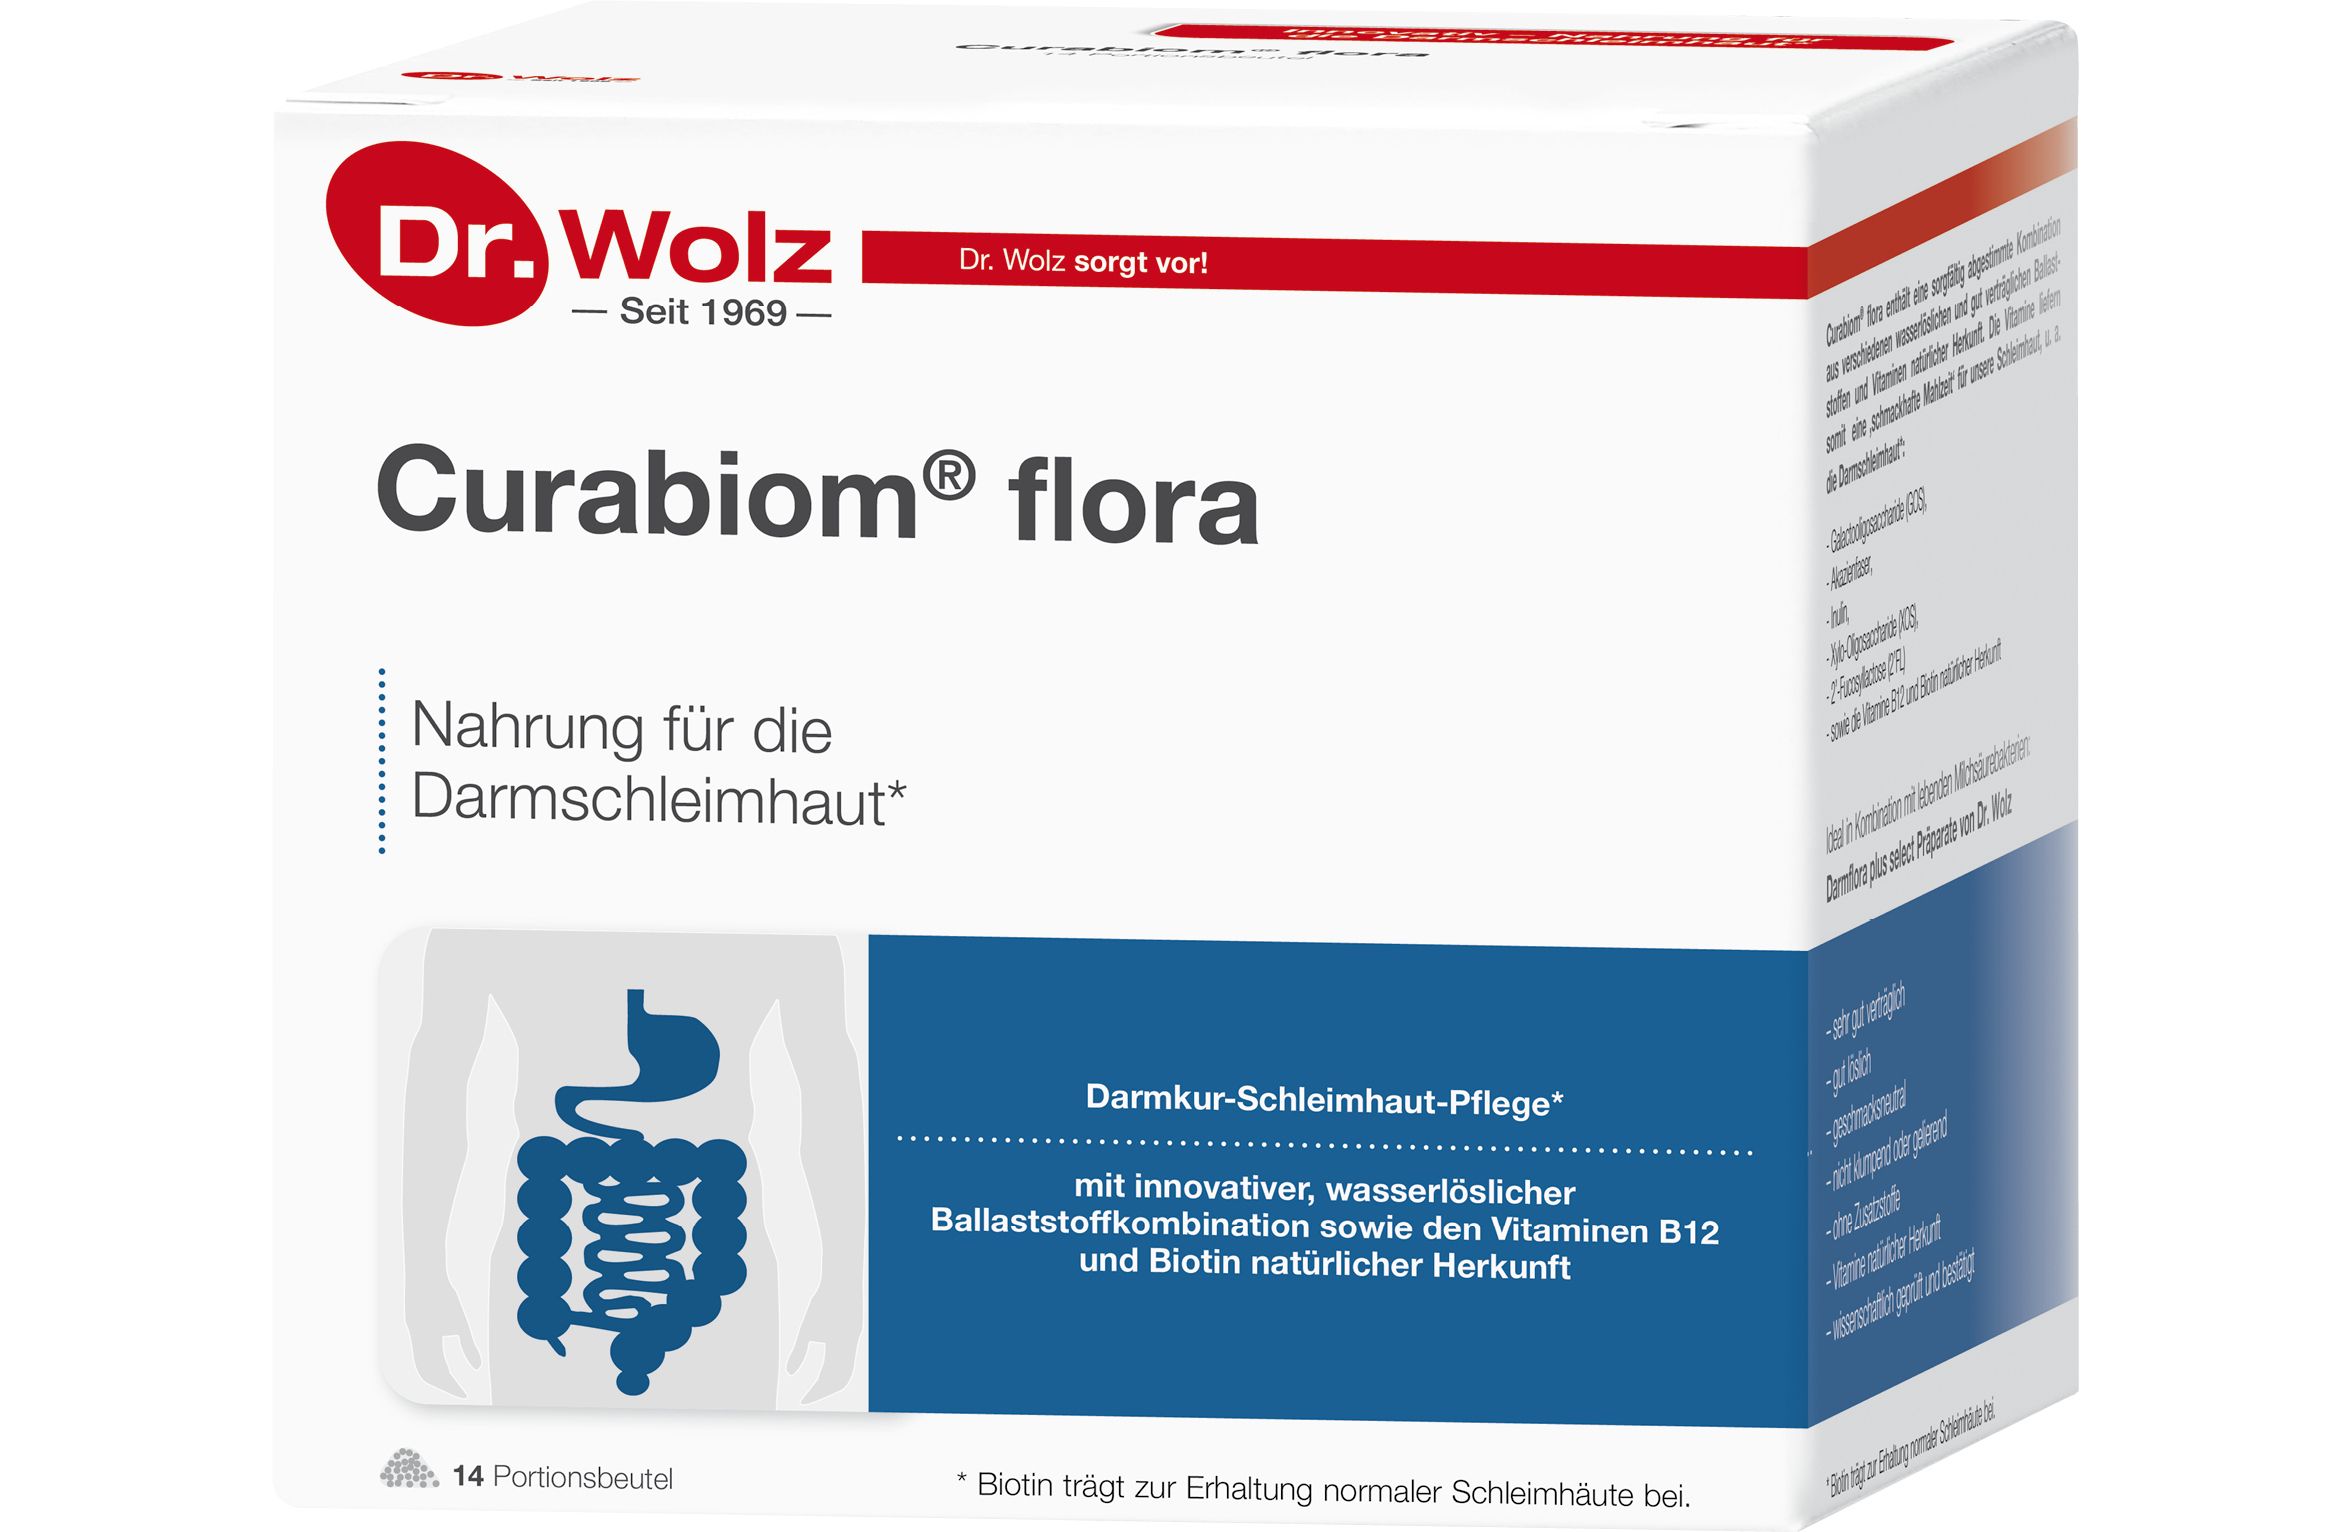 Dr. Wolz Zell GmbH Curabiom® flora